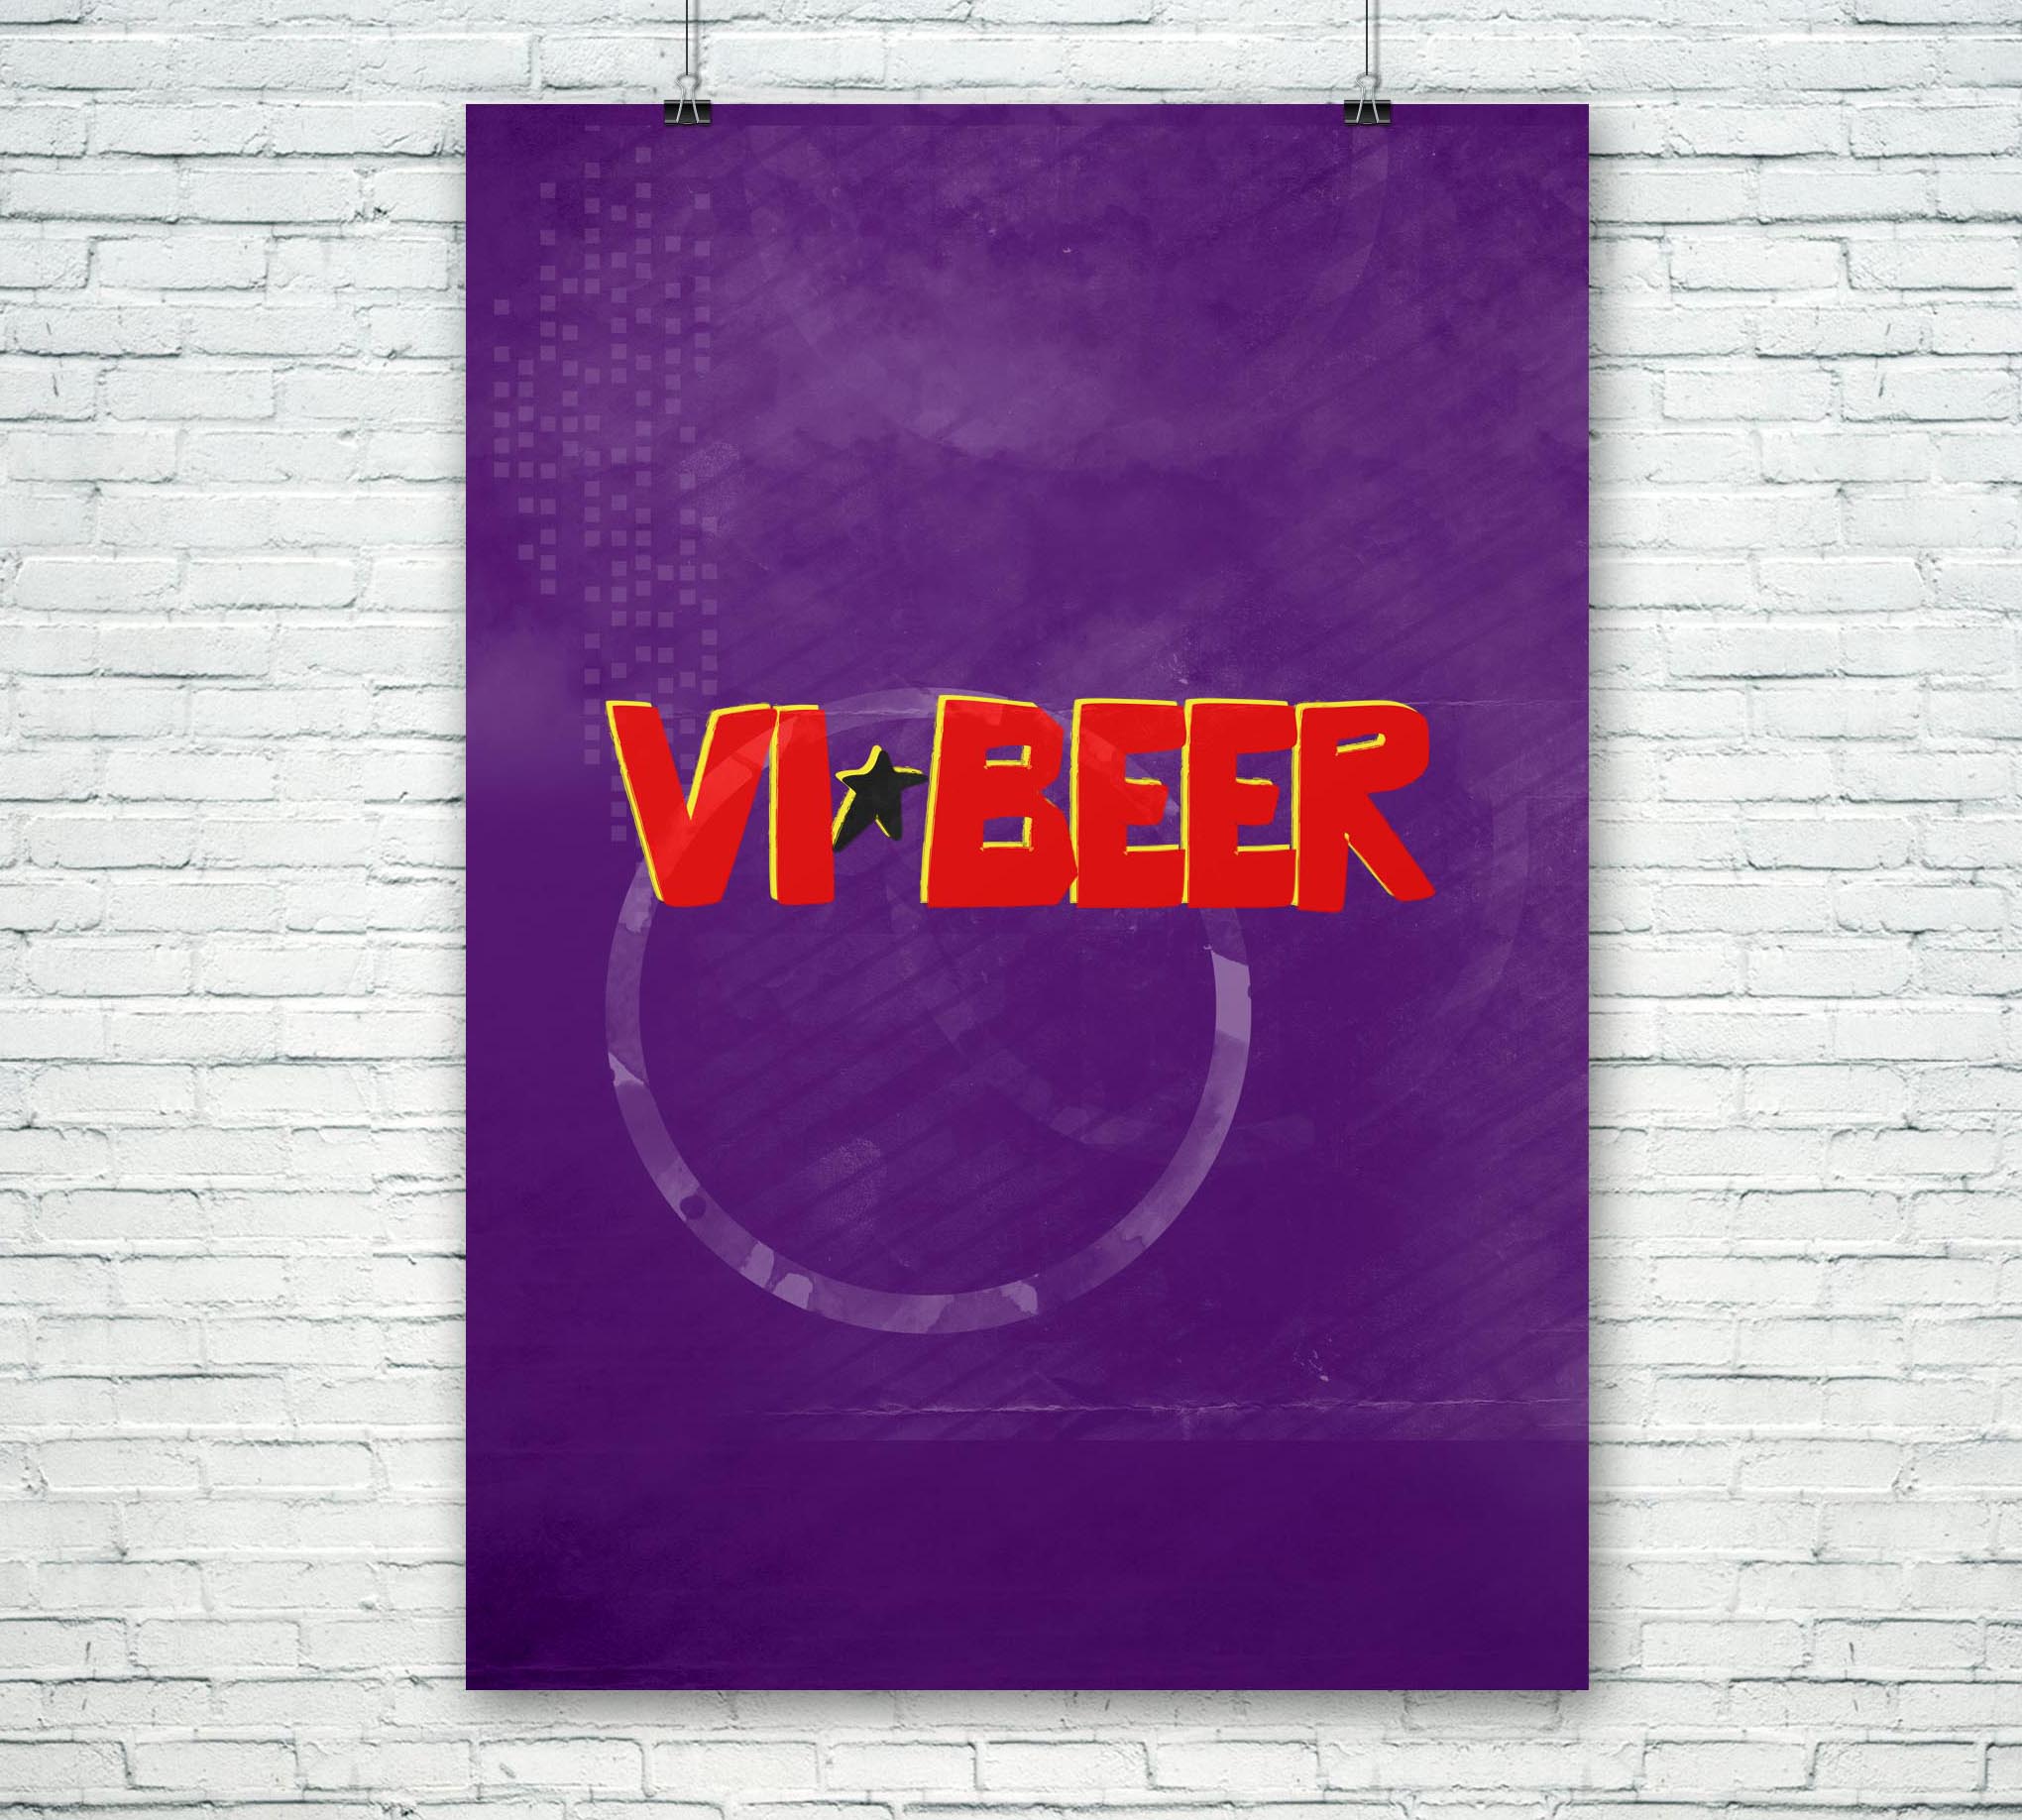 Vi-Beer_A0 PSD Poster Mockup